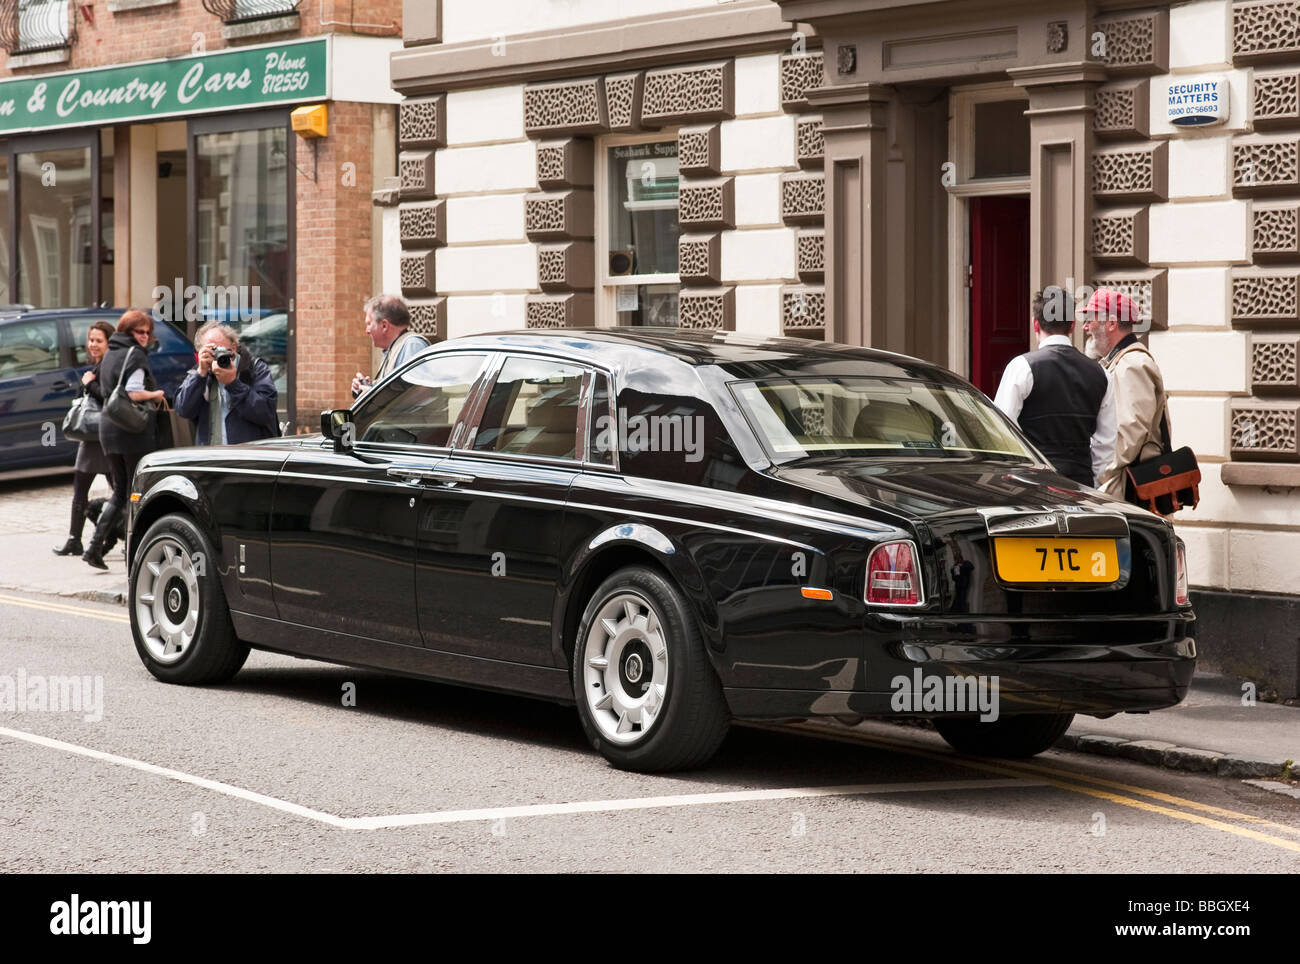 Focus of attention sleek black Rolls Royce saloon car in Buckingham UK Stock Photo